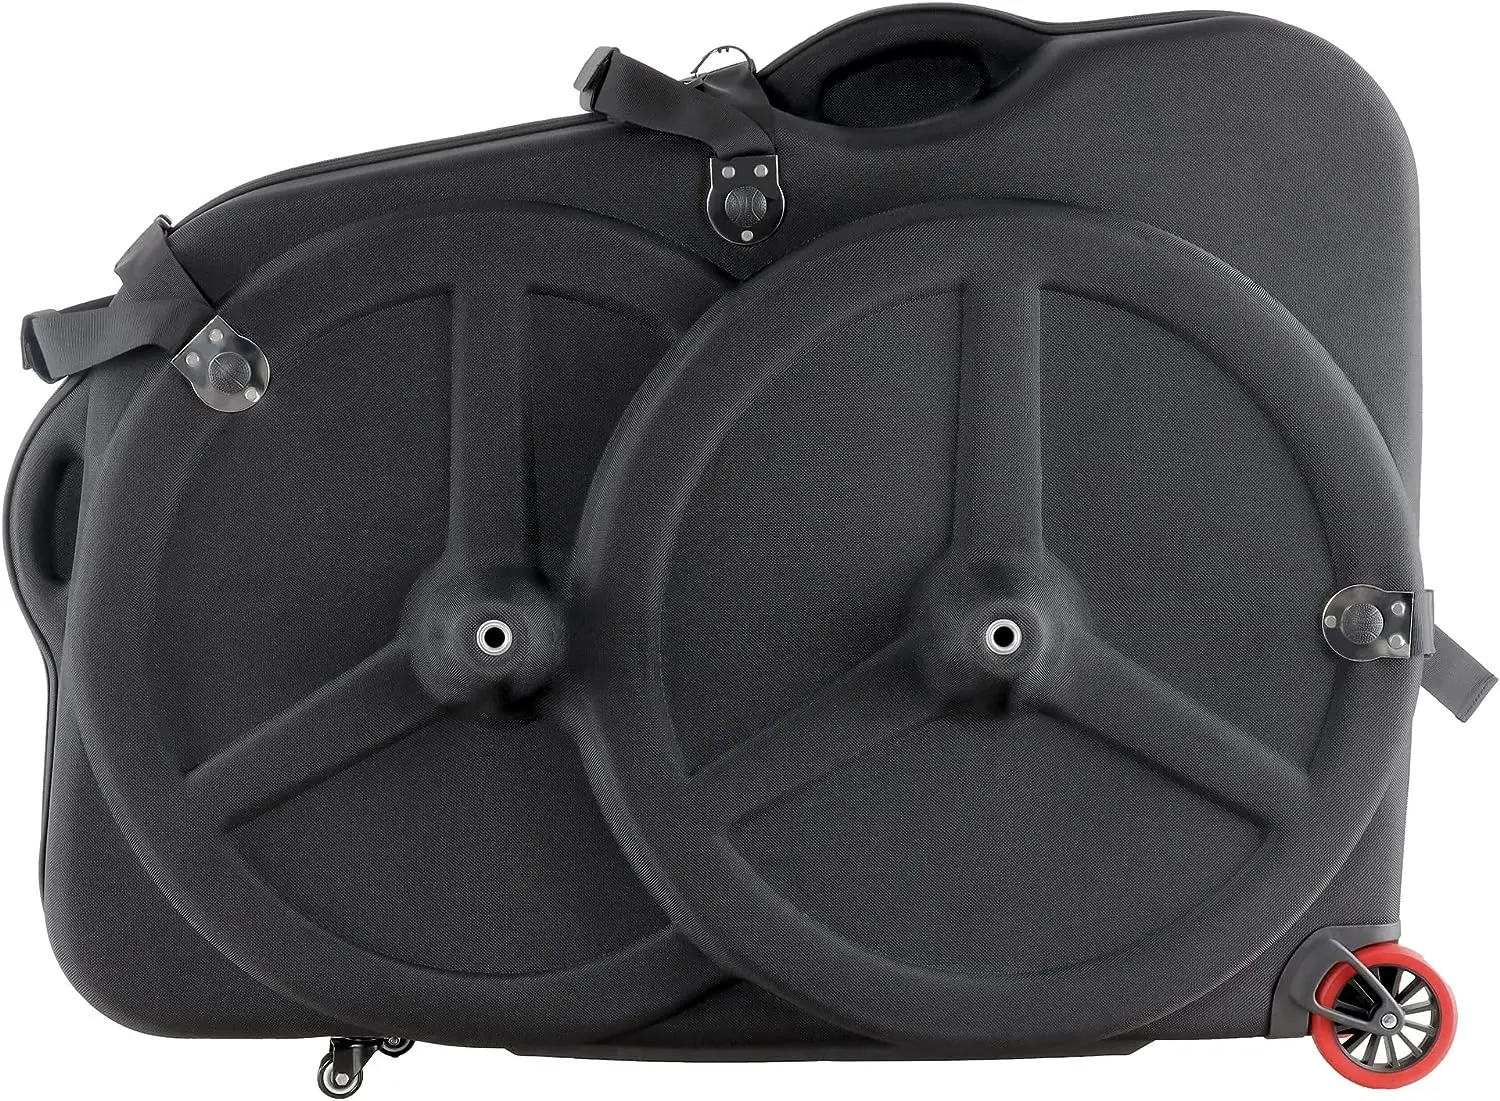 

Travel Case - 700c Bikes - Bicycle Air Flights Travel Hard Case Box Bag EVA Lightweight & Durable with TSA Lock - Great for